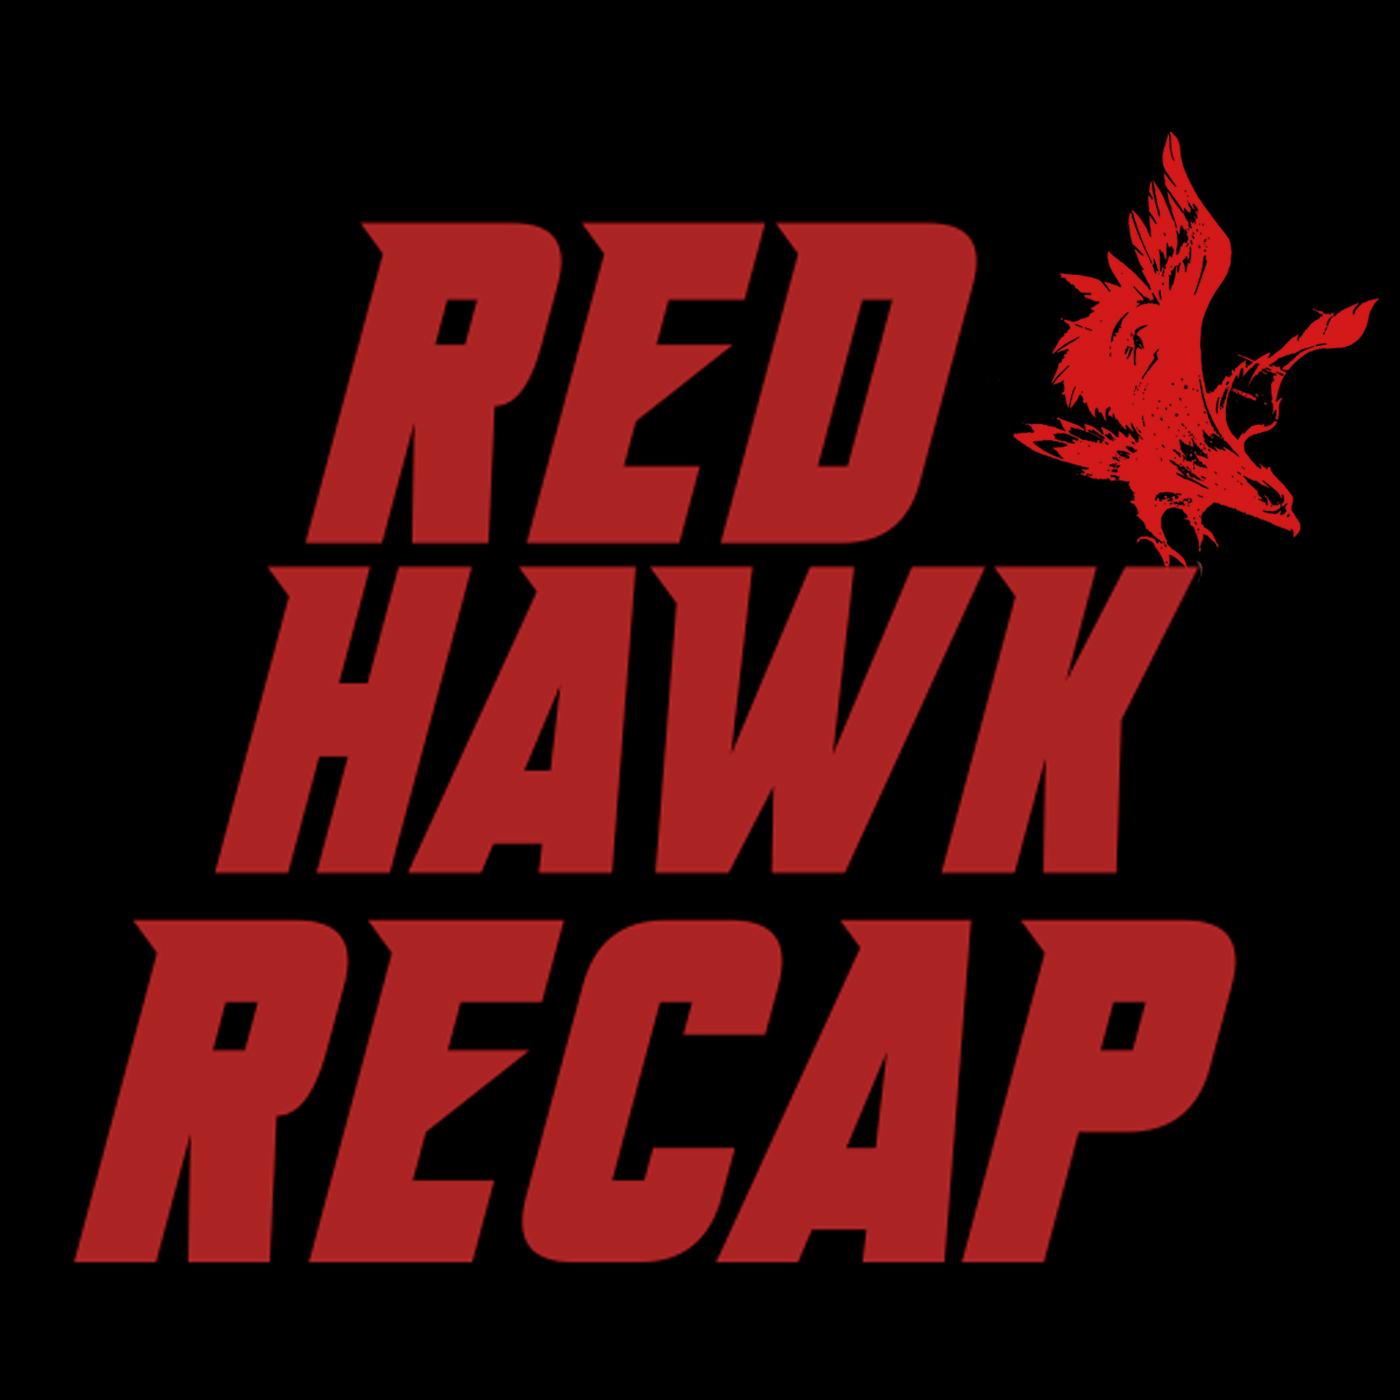 Redhawk Recap